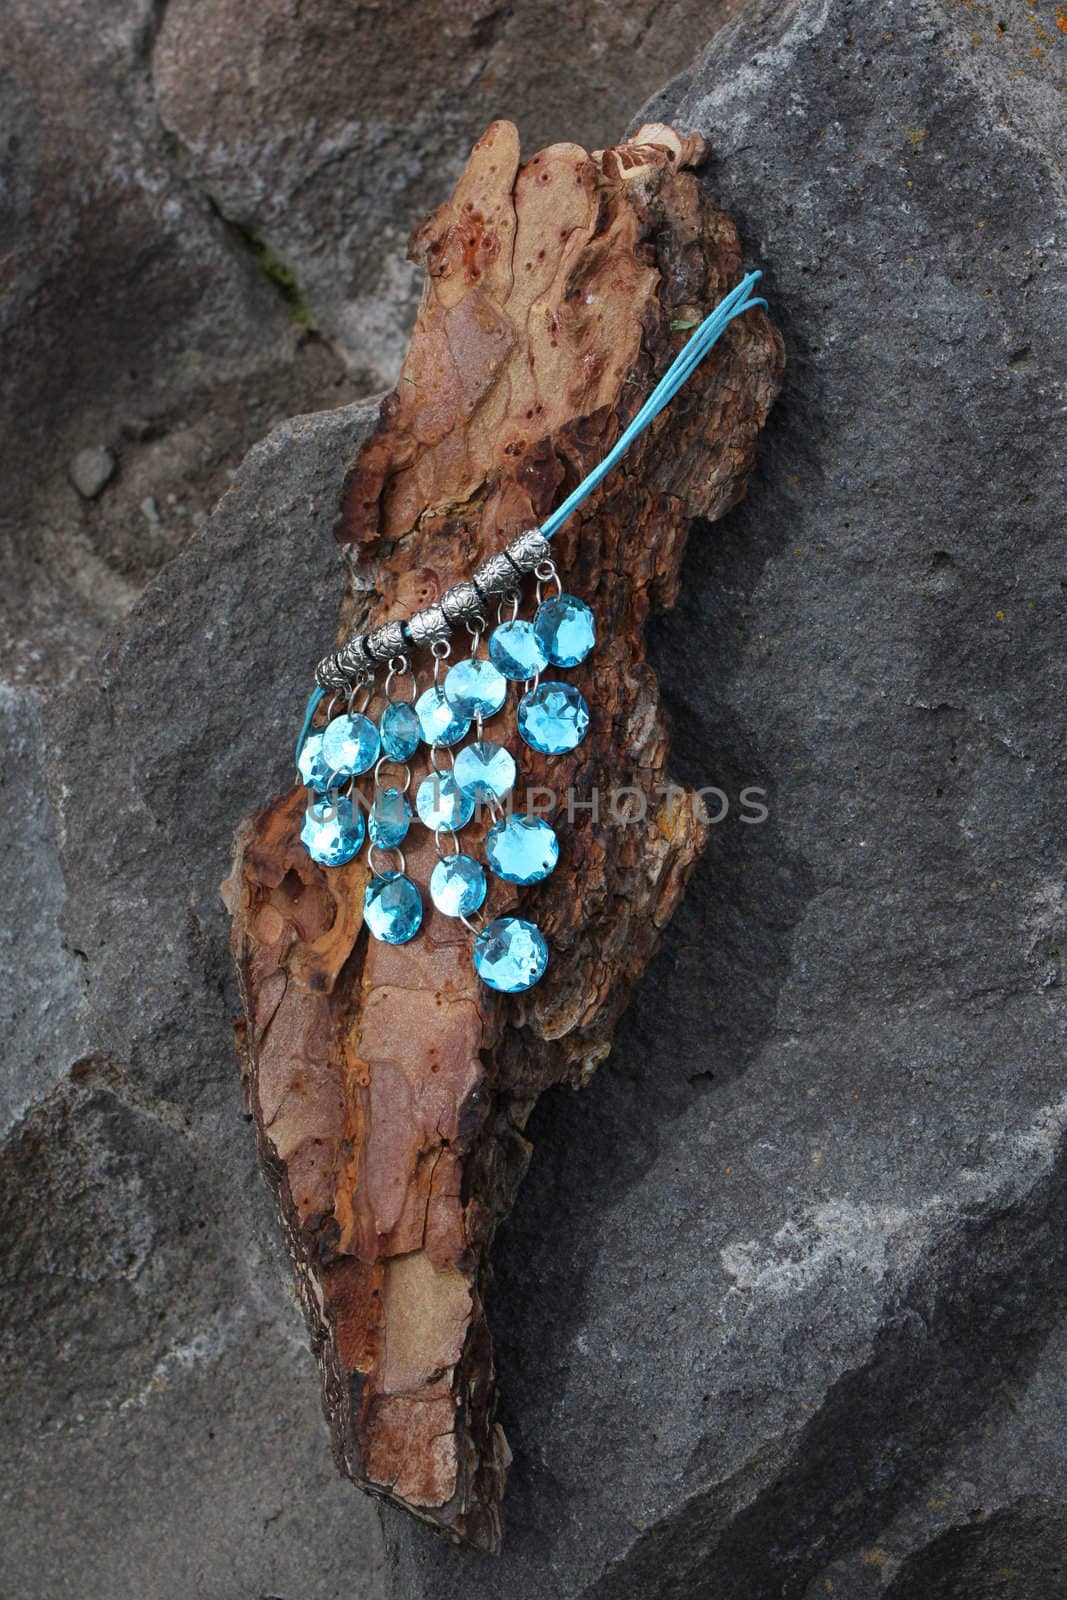 Blue gem necklace on a piece of bark